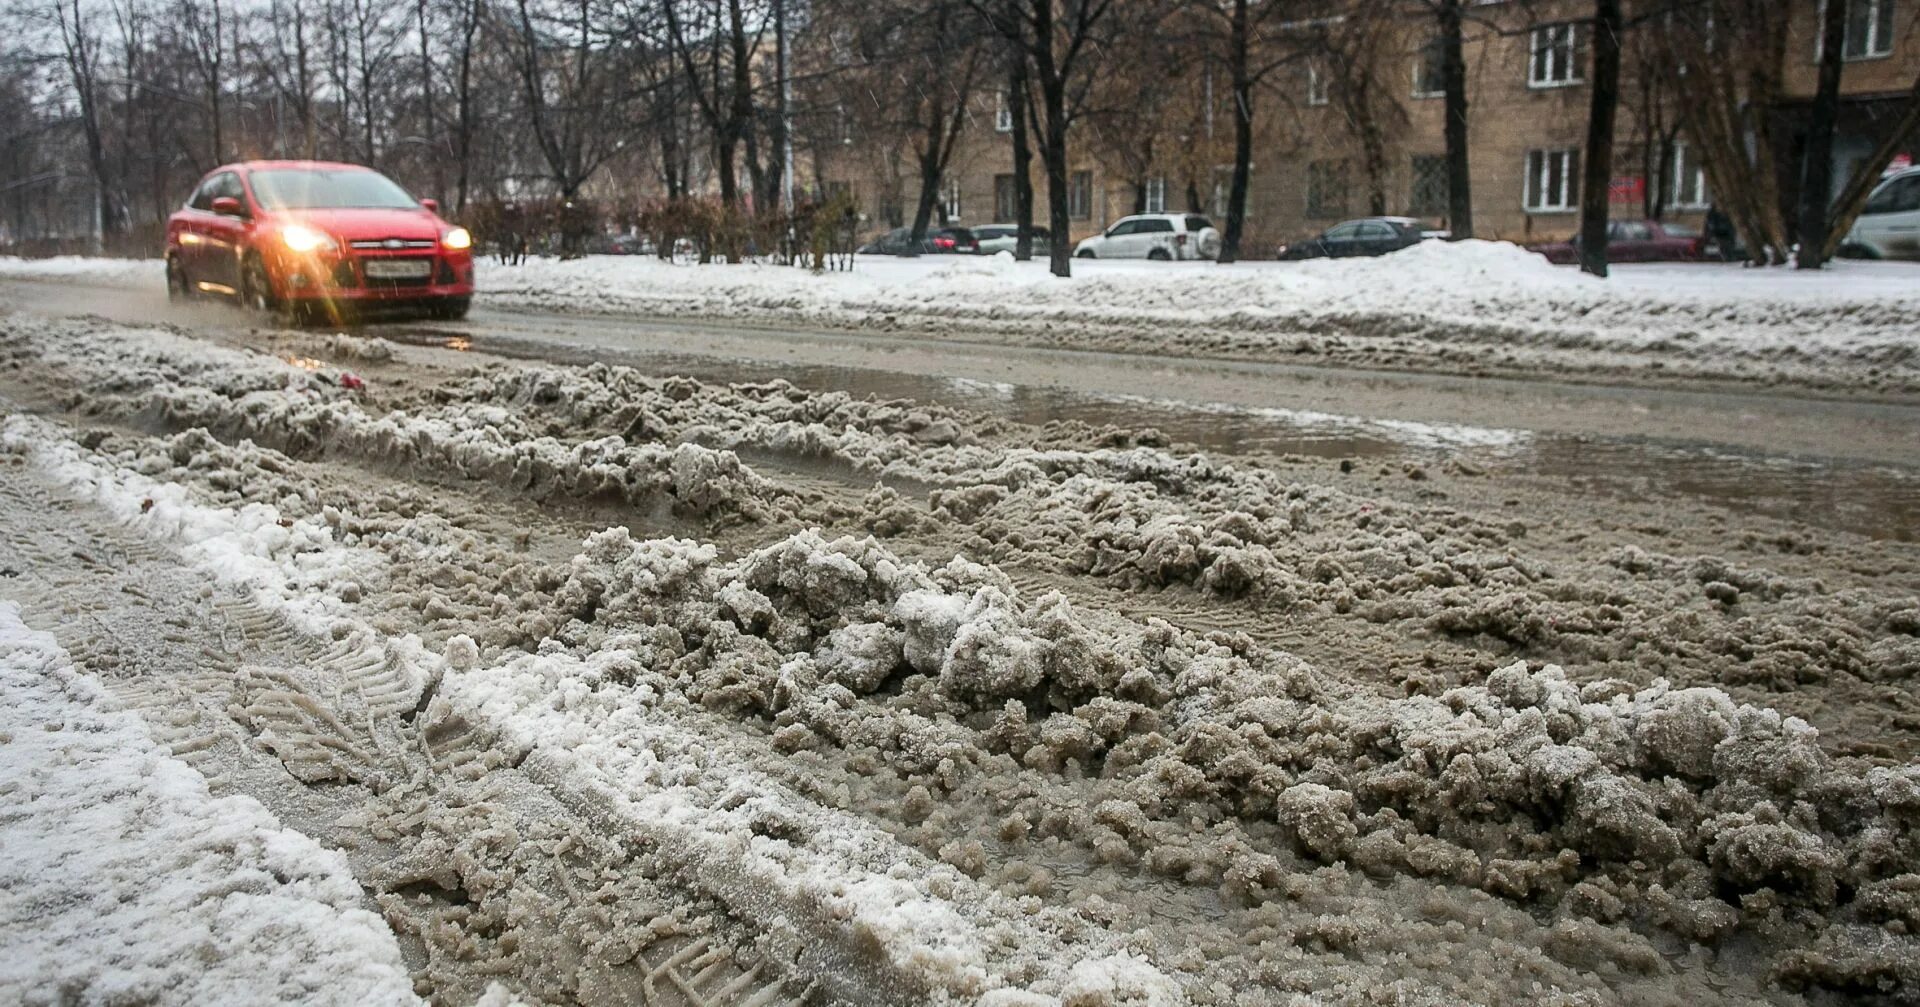 Бутырка на дороге грязный снег. Грязный снег в городе. Грязная дорога. Снег с грязью на дороге. Загрязнение снега.